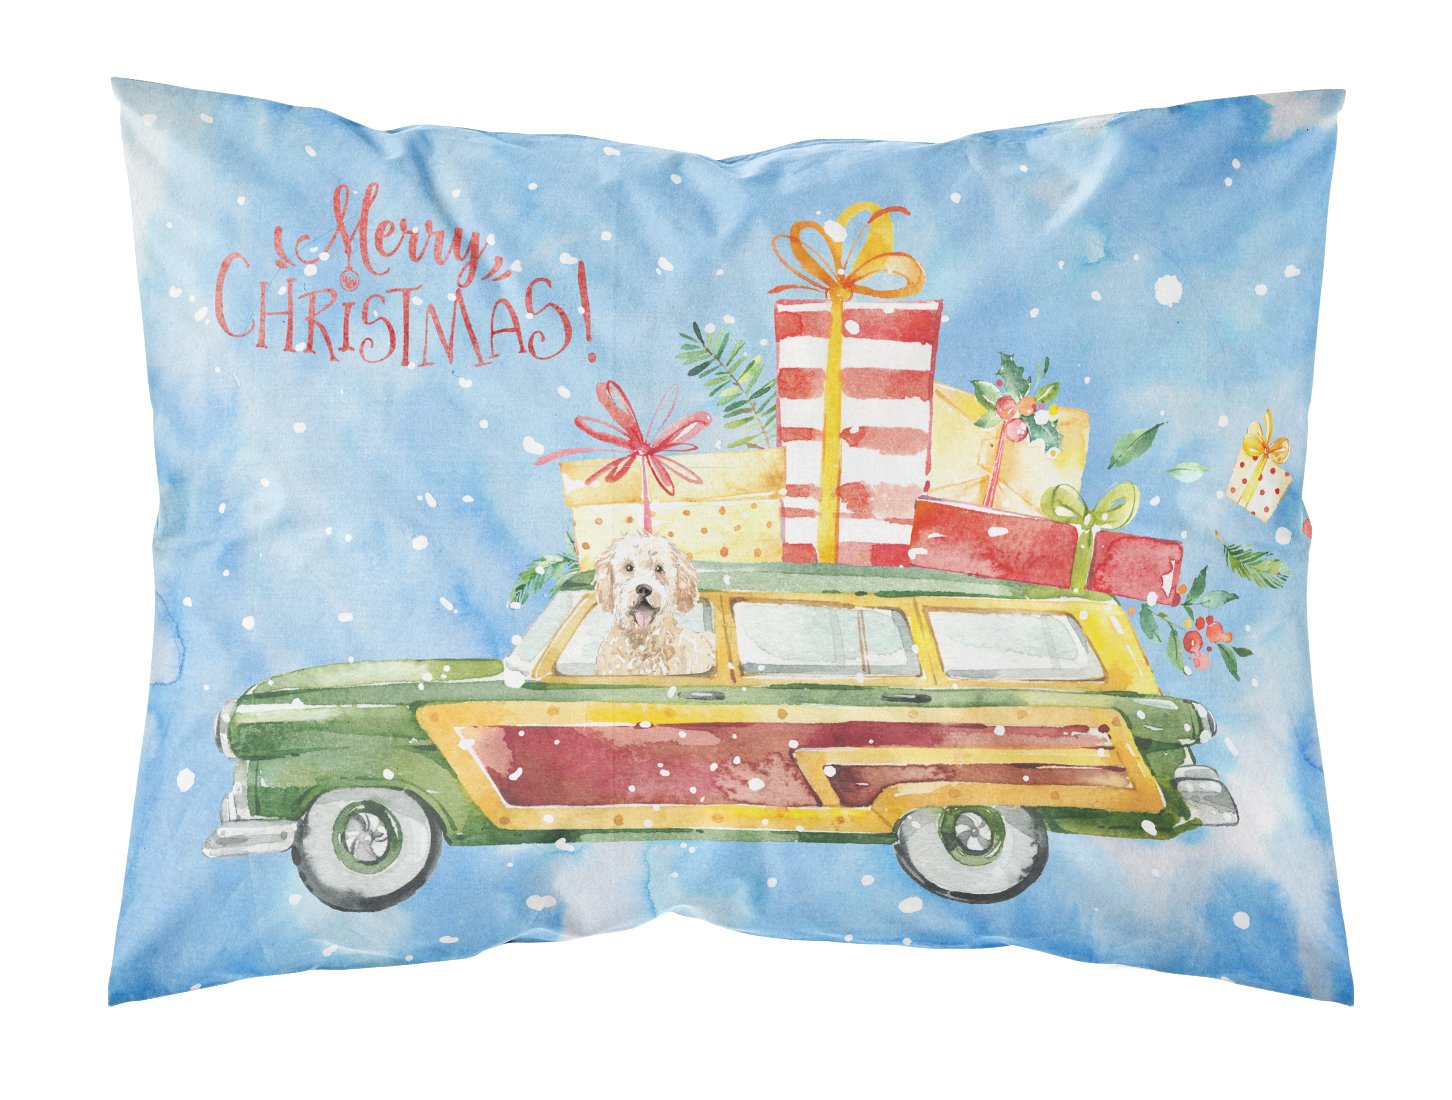 Merry Christmas Goldendoodle Fabric Standard Pillowcase CK2406PILLOWCASE by Caroline's Treasures